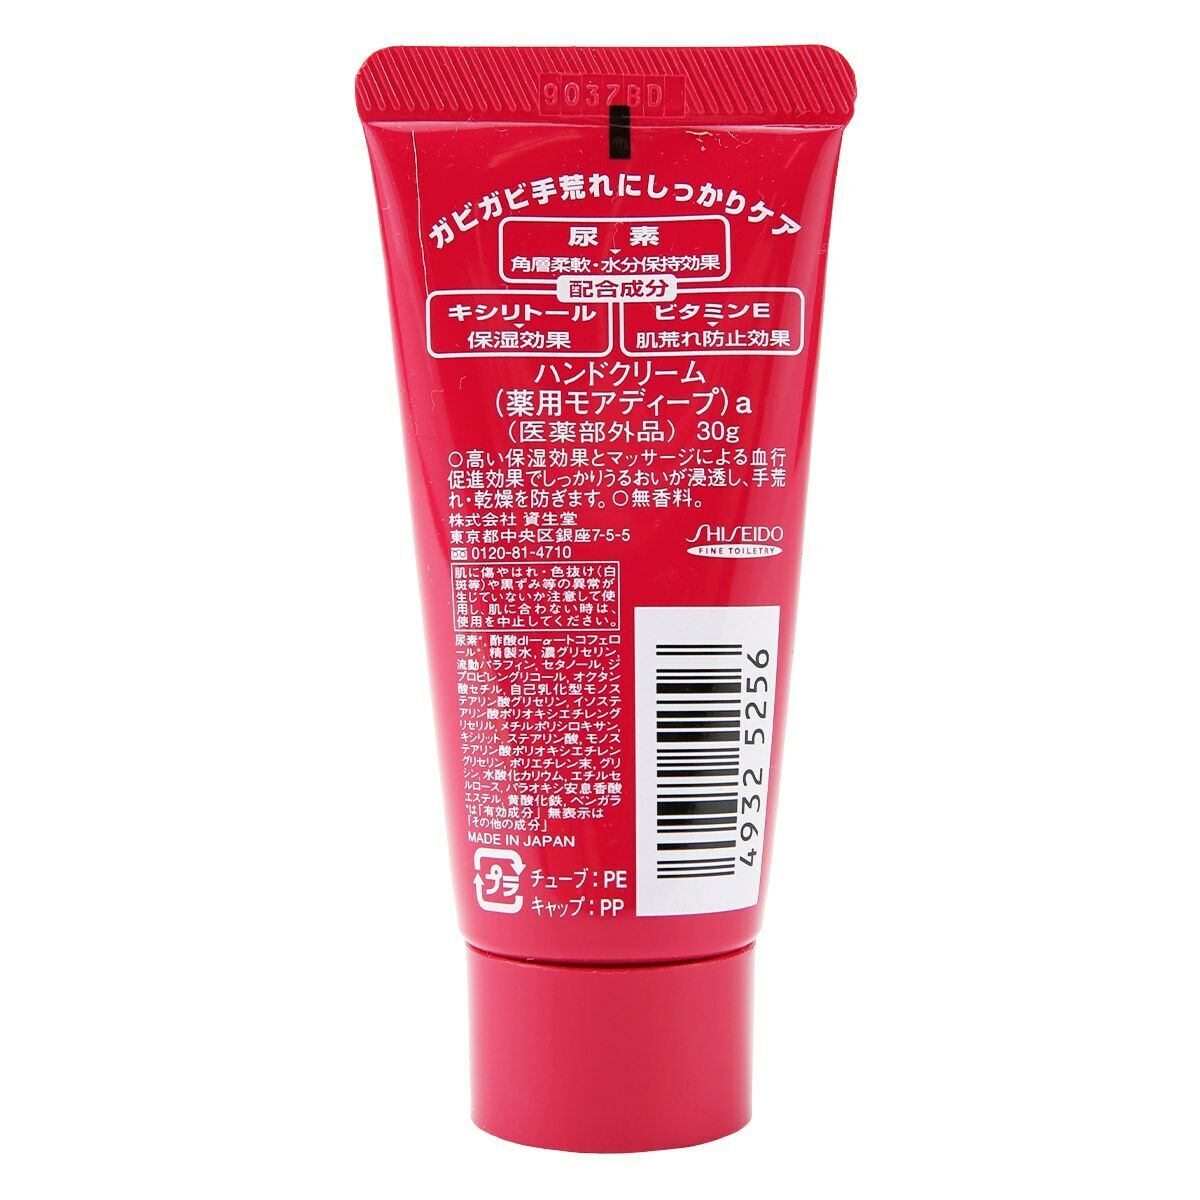 Shiseido Hand Cream More Deep Red Moisturizing Extra Strength Hydrating 30g NEW